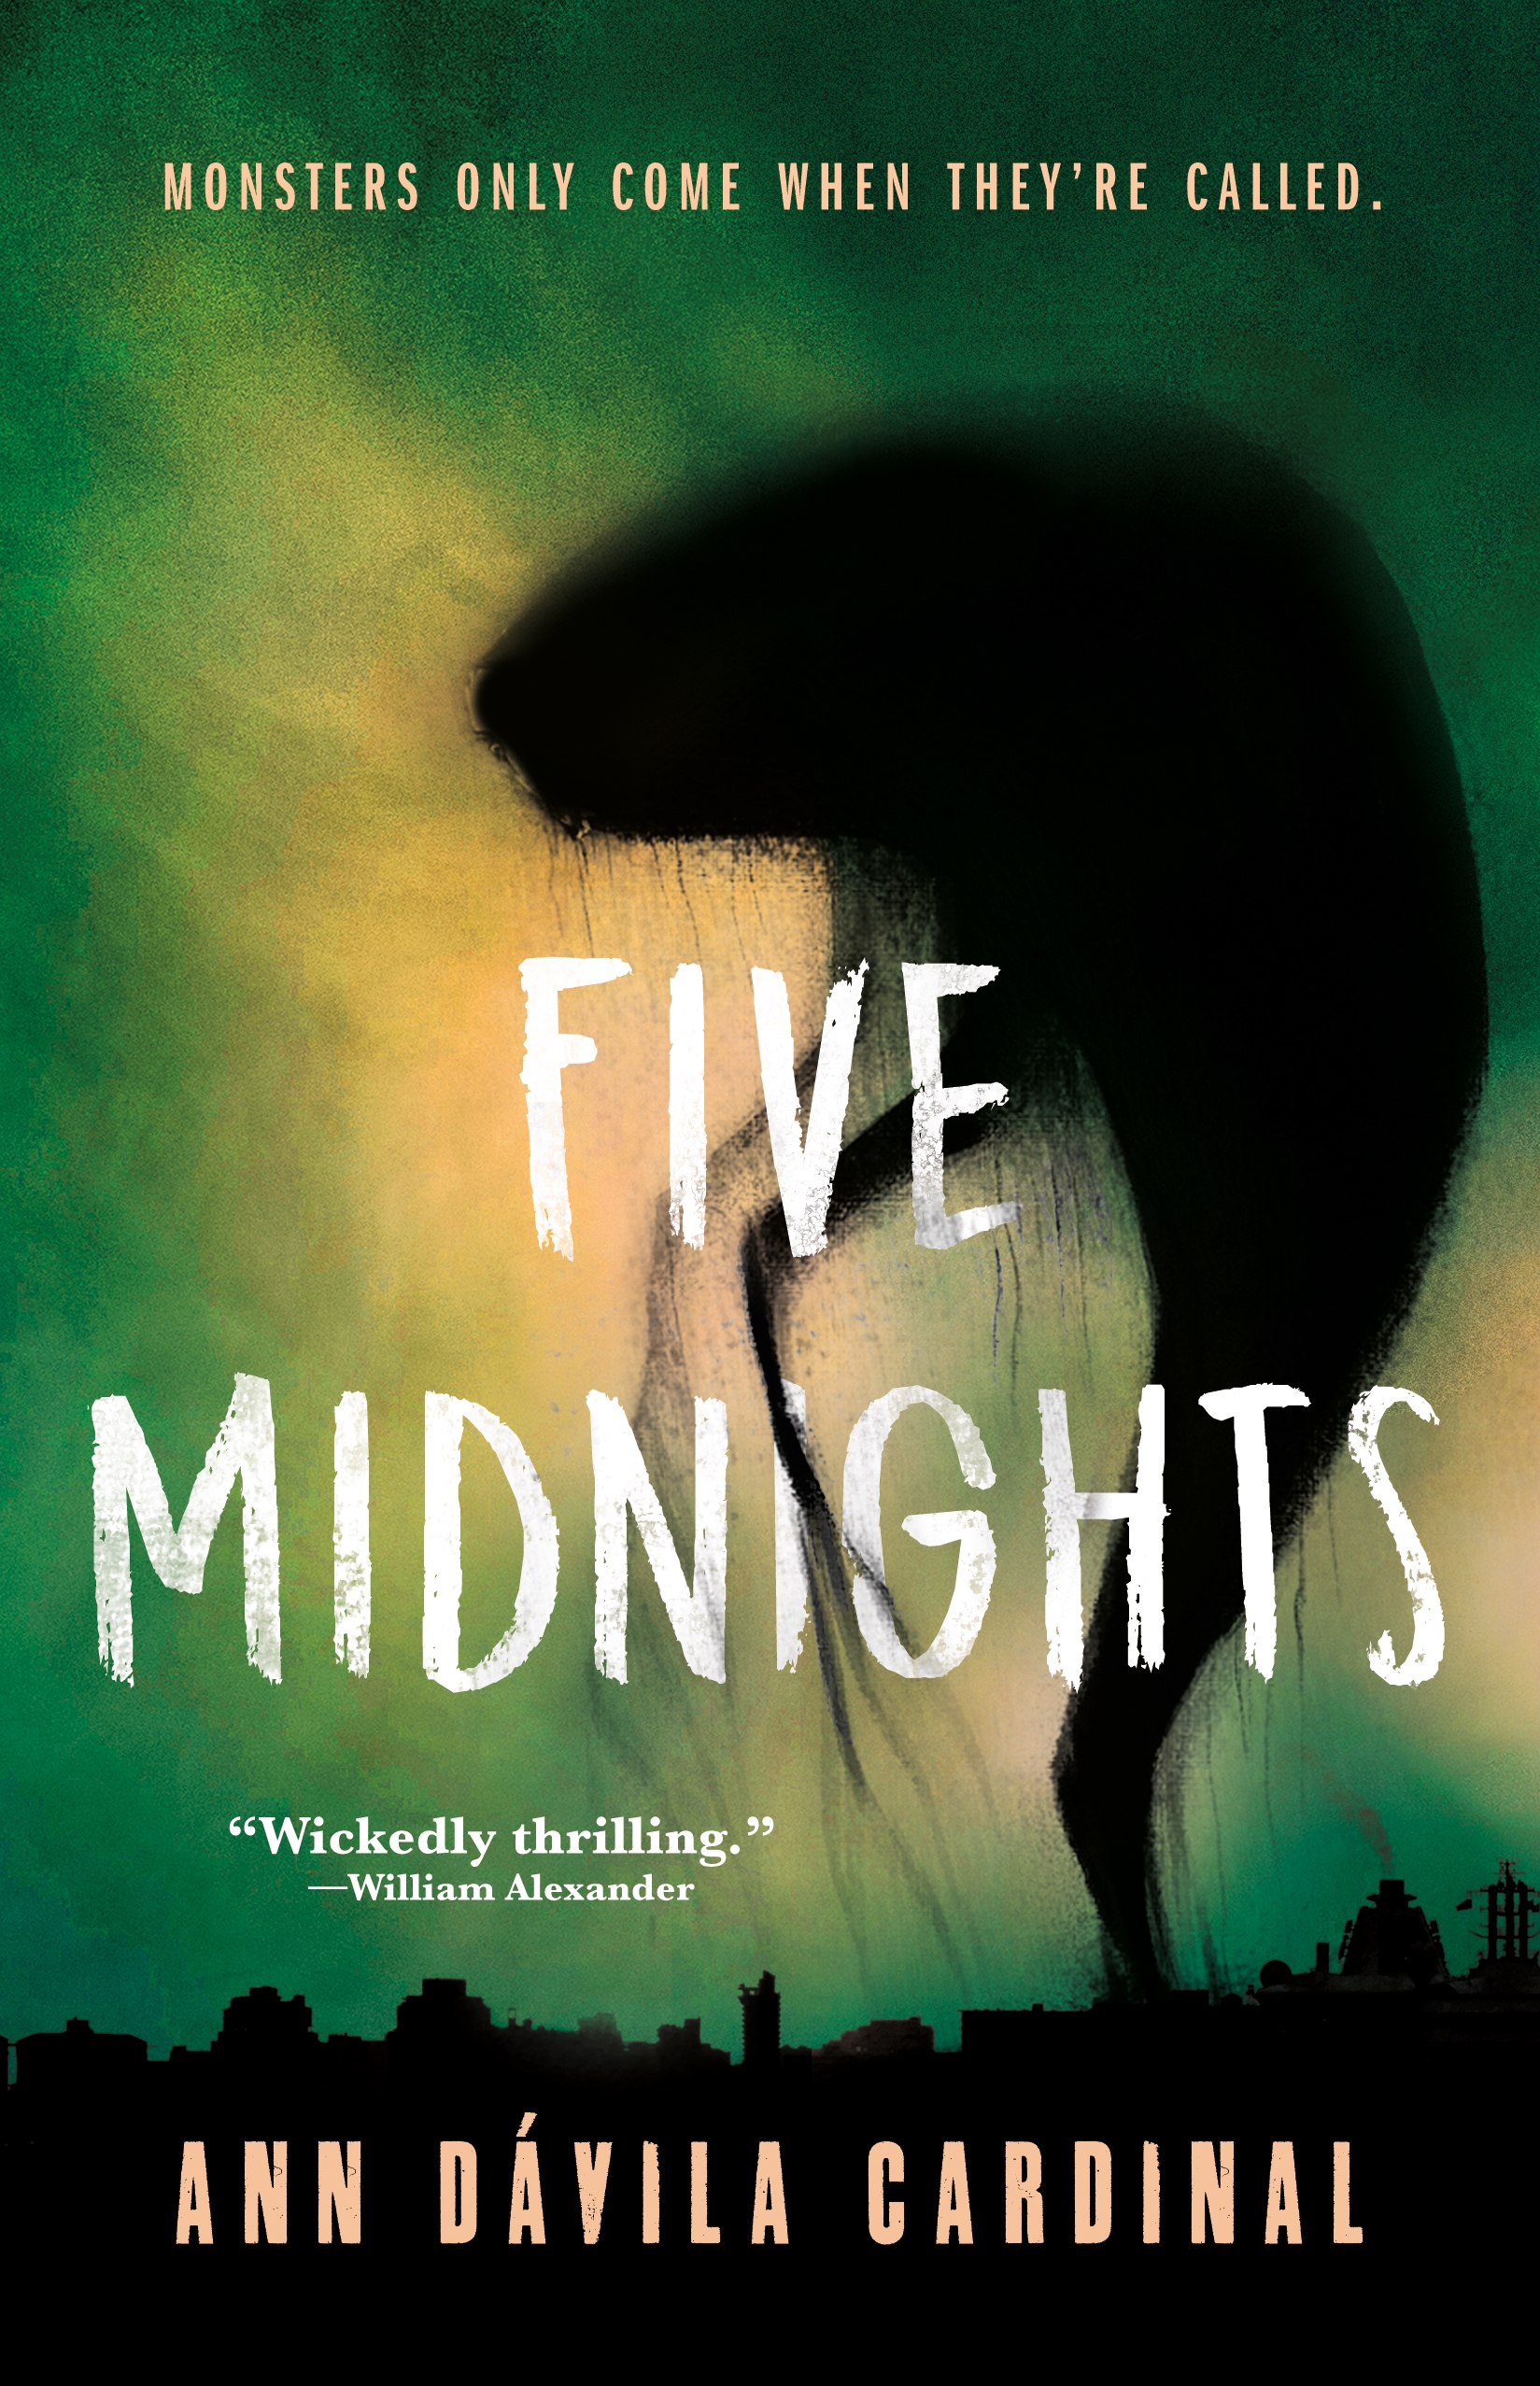 Five Midnights by Ann Dávila Cardinal